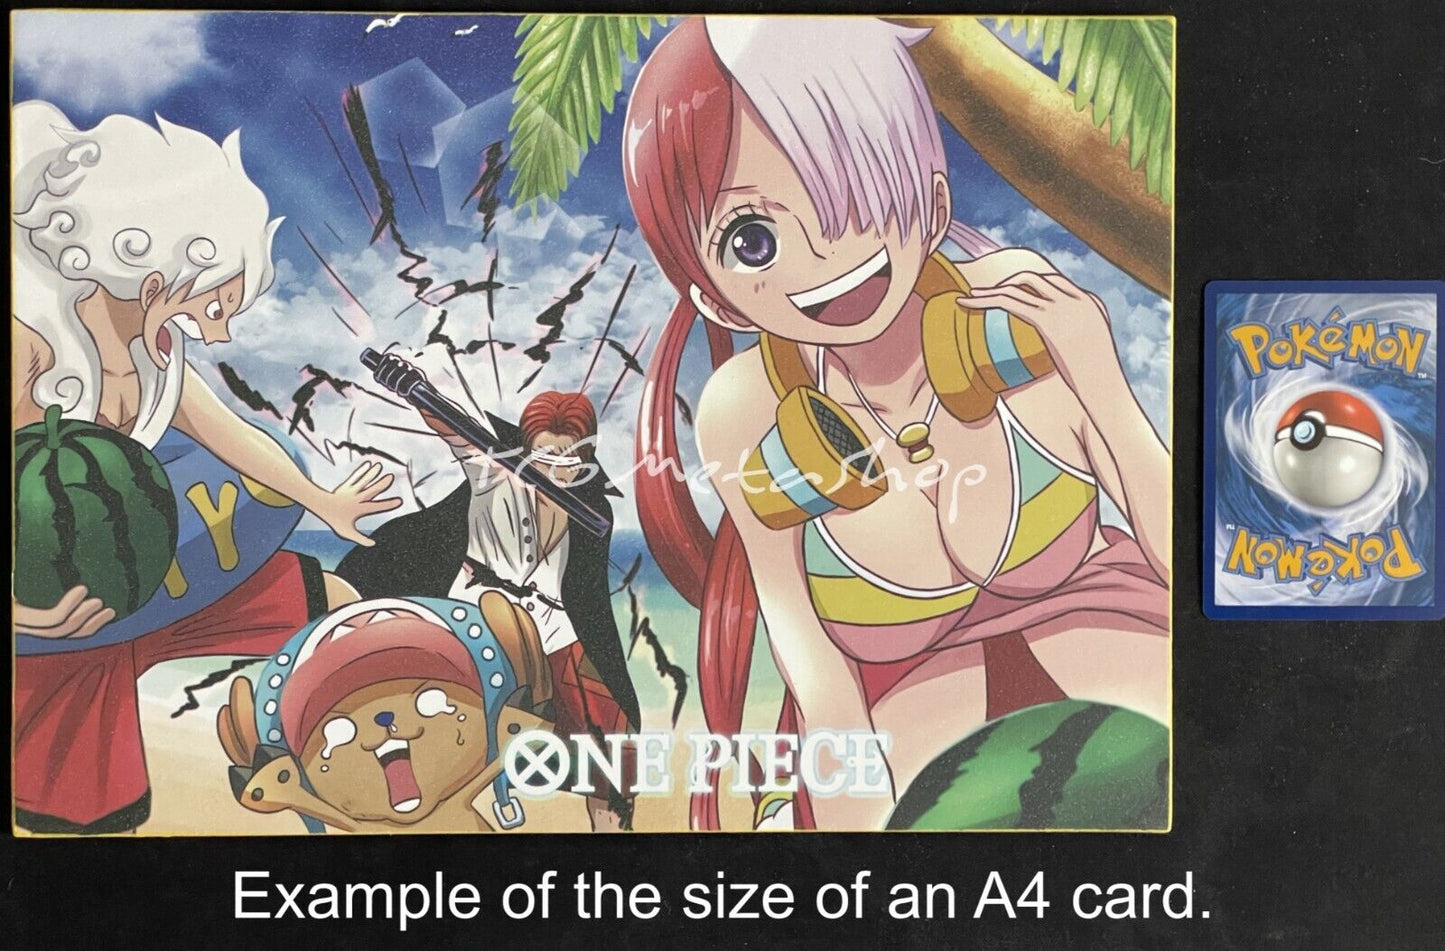 🔥 Nami One Piece Goddess Story Anime Waifu A4 Card SSP 6 🔥